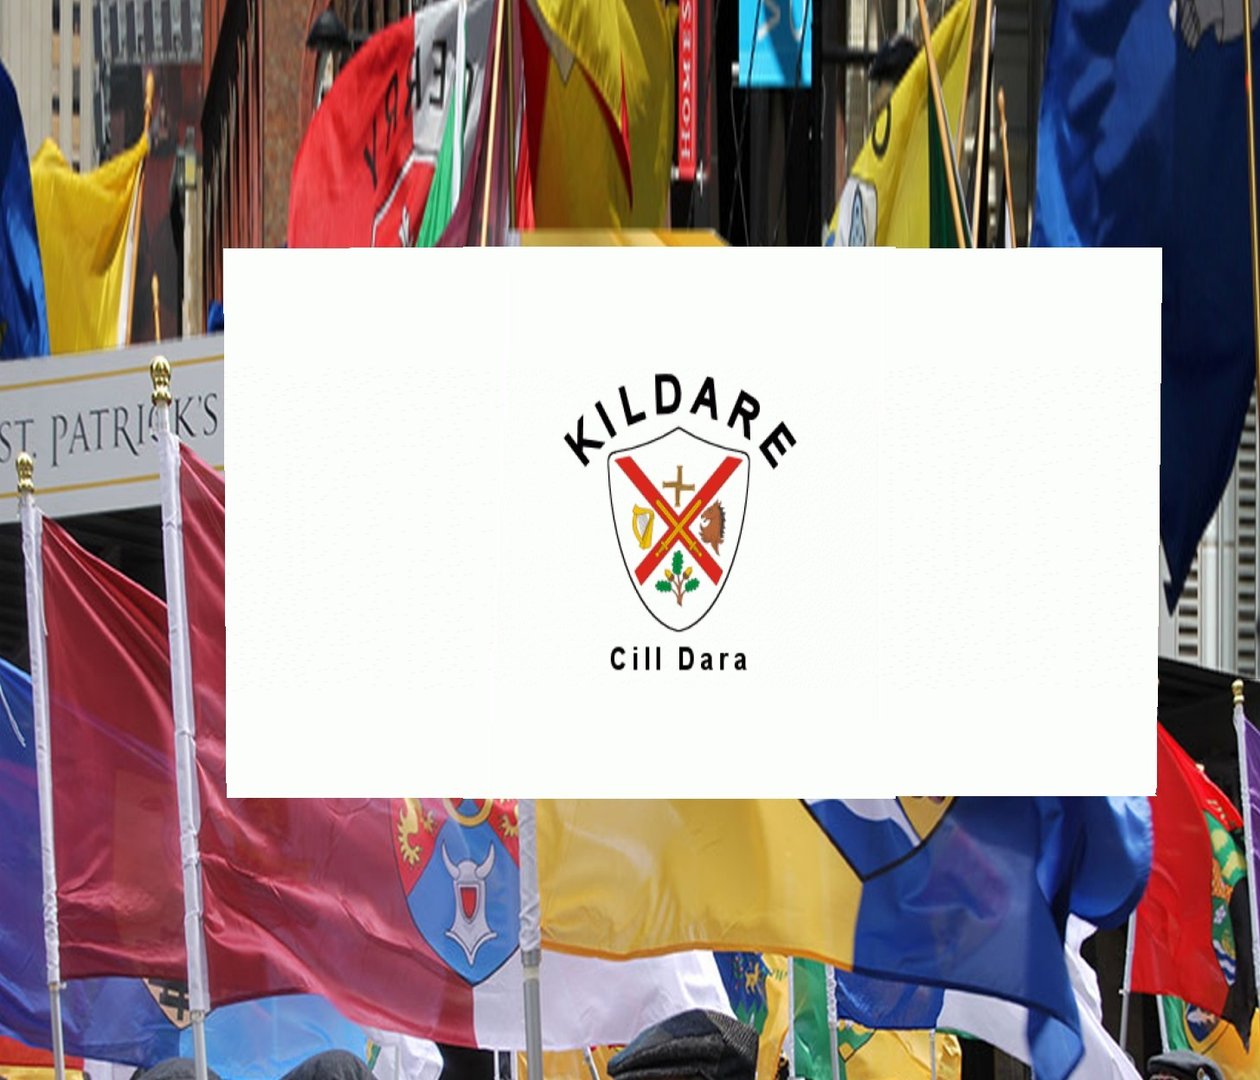 Kildare County Ireland Crest Flag ~ 5 X 3 ft